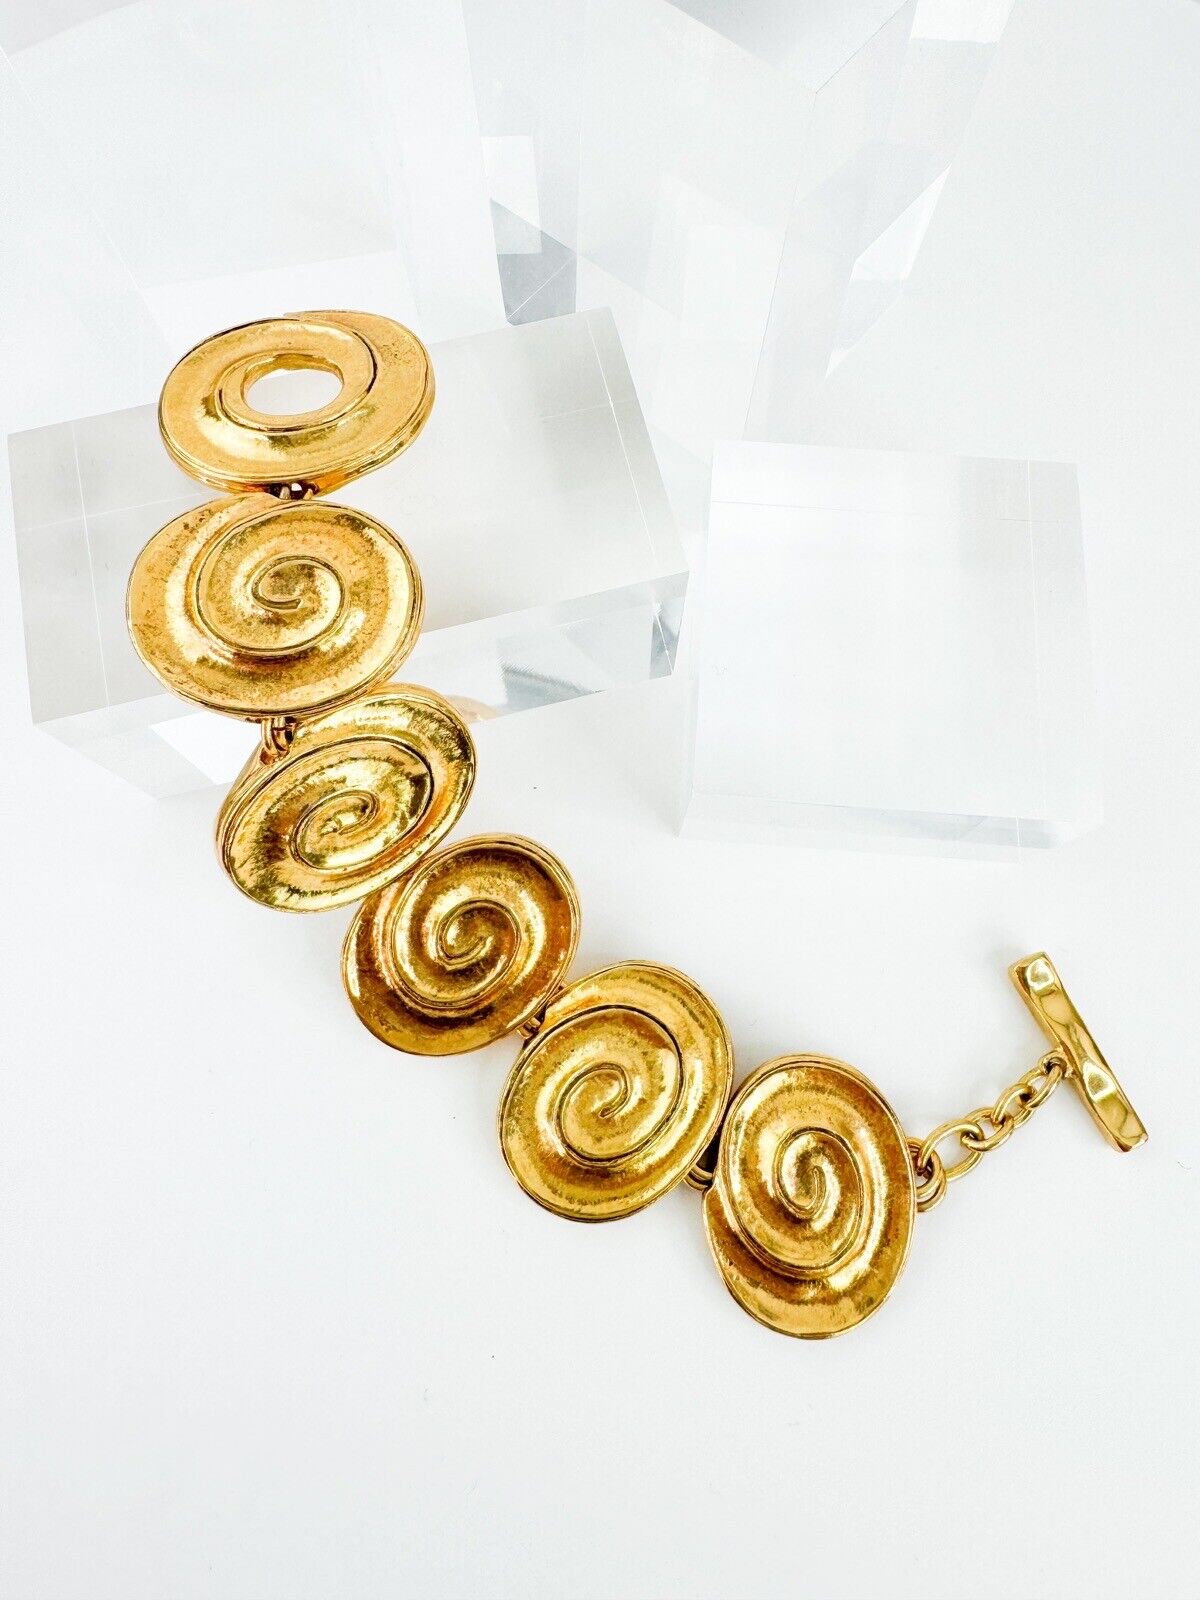 Vintage YSL Bracelet , Yves Saint Laurent Bracelet, YSL Chain Bracelet,shell Bracelet, Gold Tone Bracelet, YSL Vintage Jewelry, Gift for her